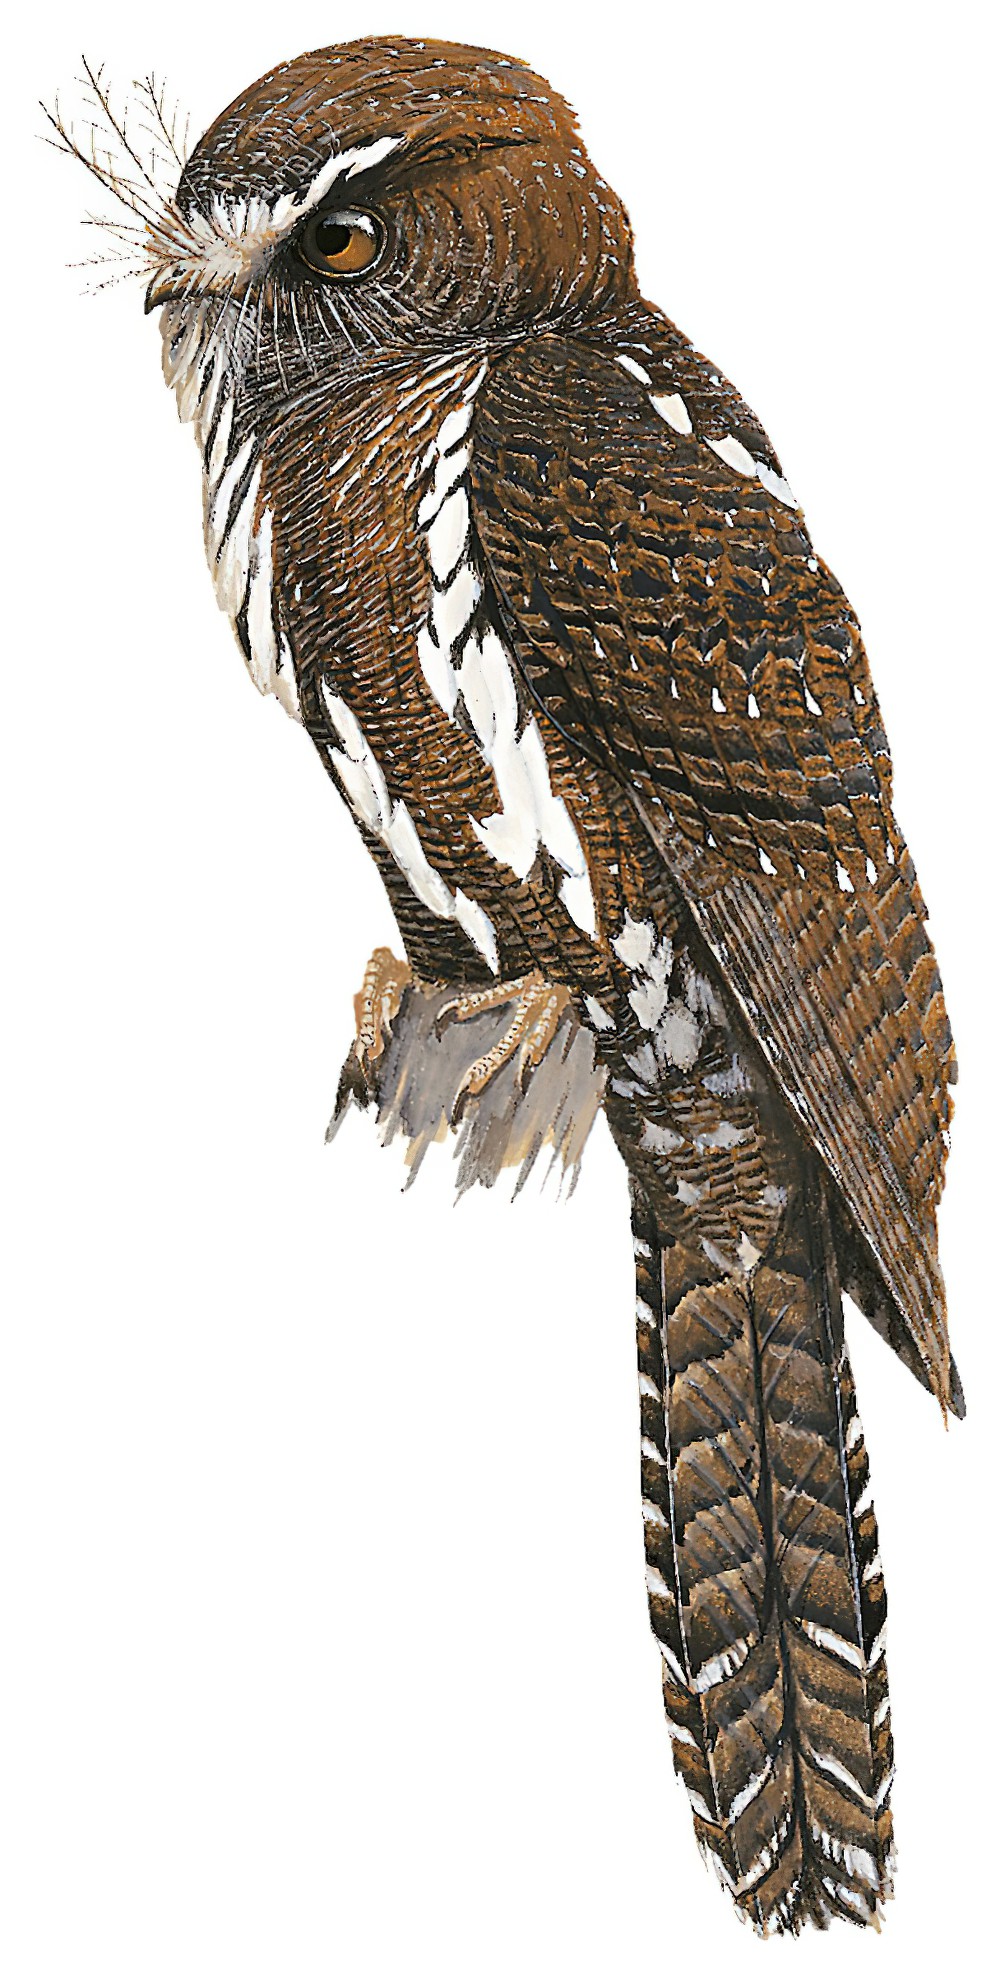 Feline Owlet-nightjar / Aegotheles insignis